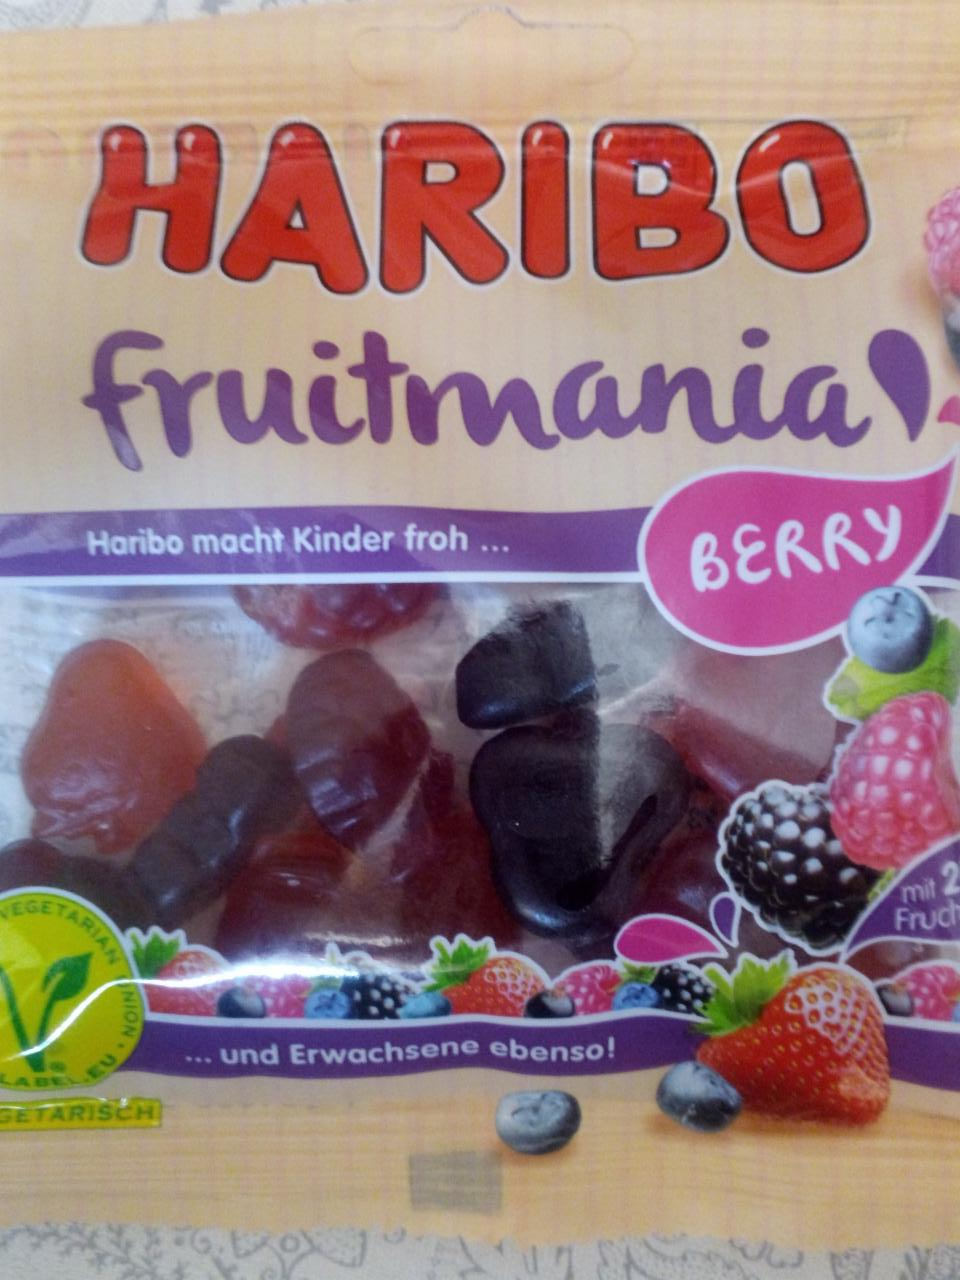 Képek - Fruitmania Berry Haribo